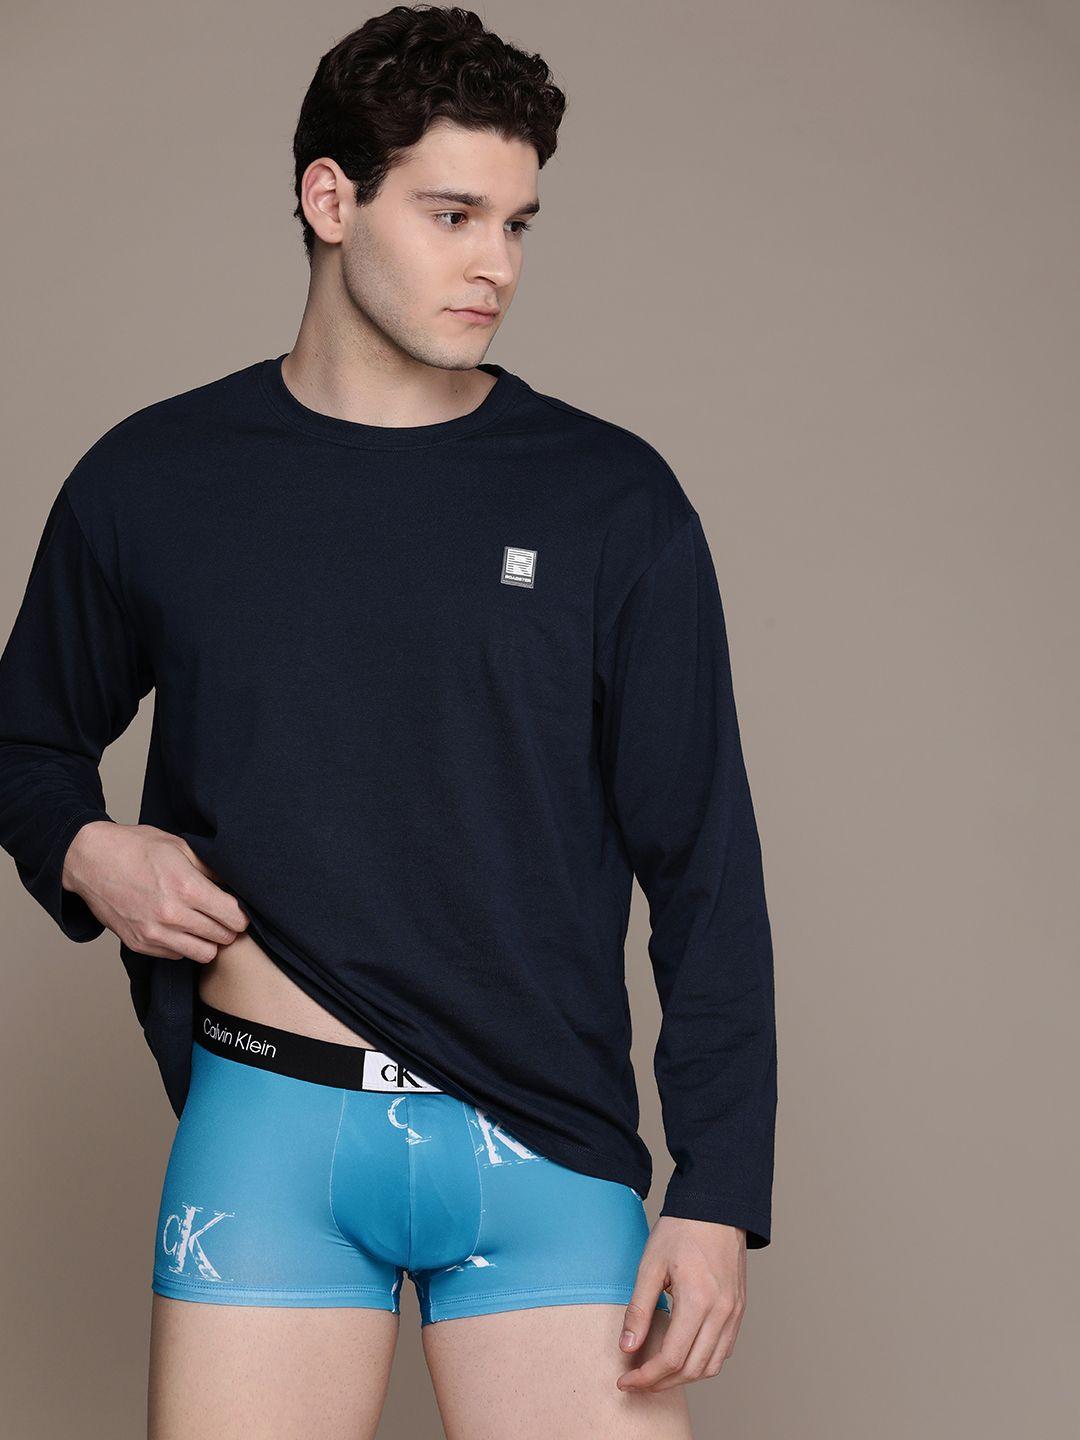 calvin klein underwear men brand logo printed low rise trunks nb3406lo4-lo4-blue